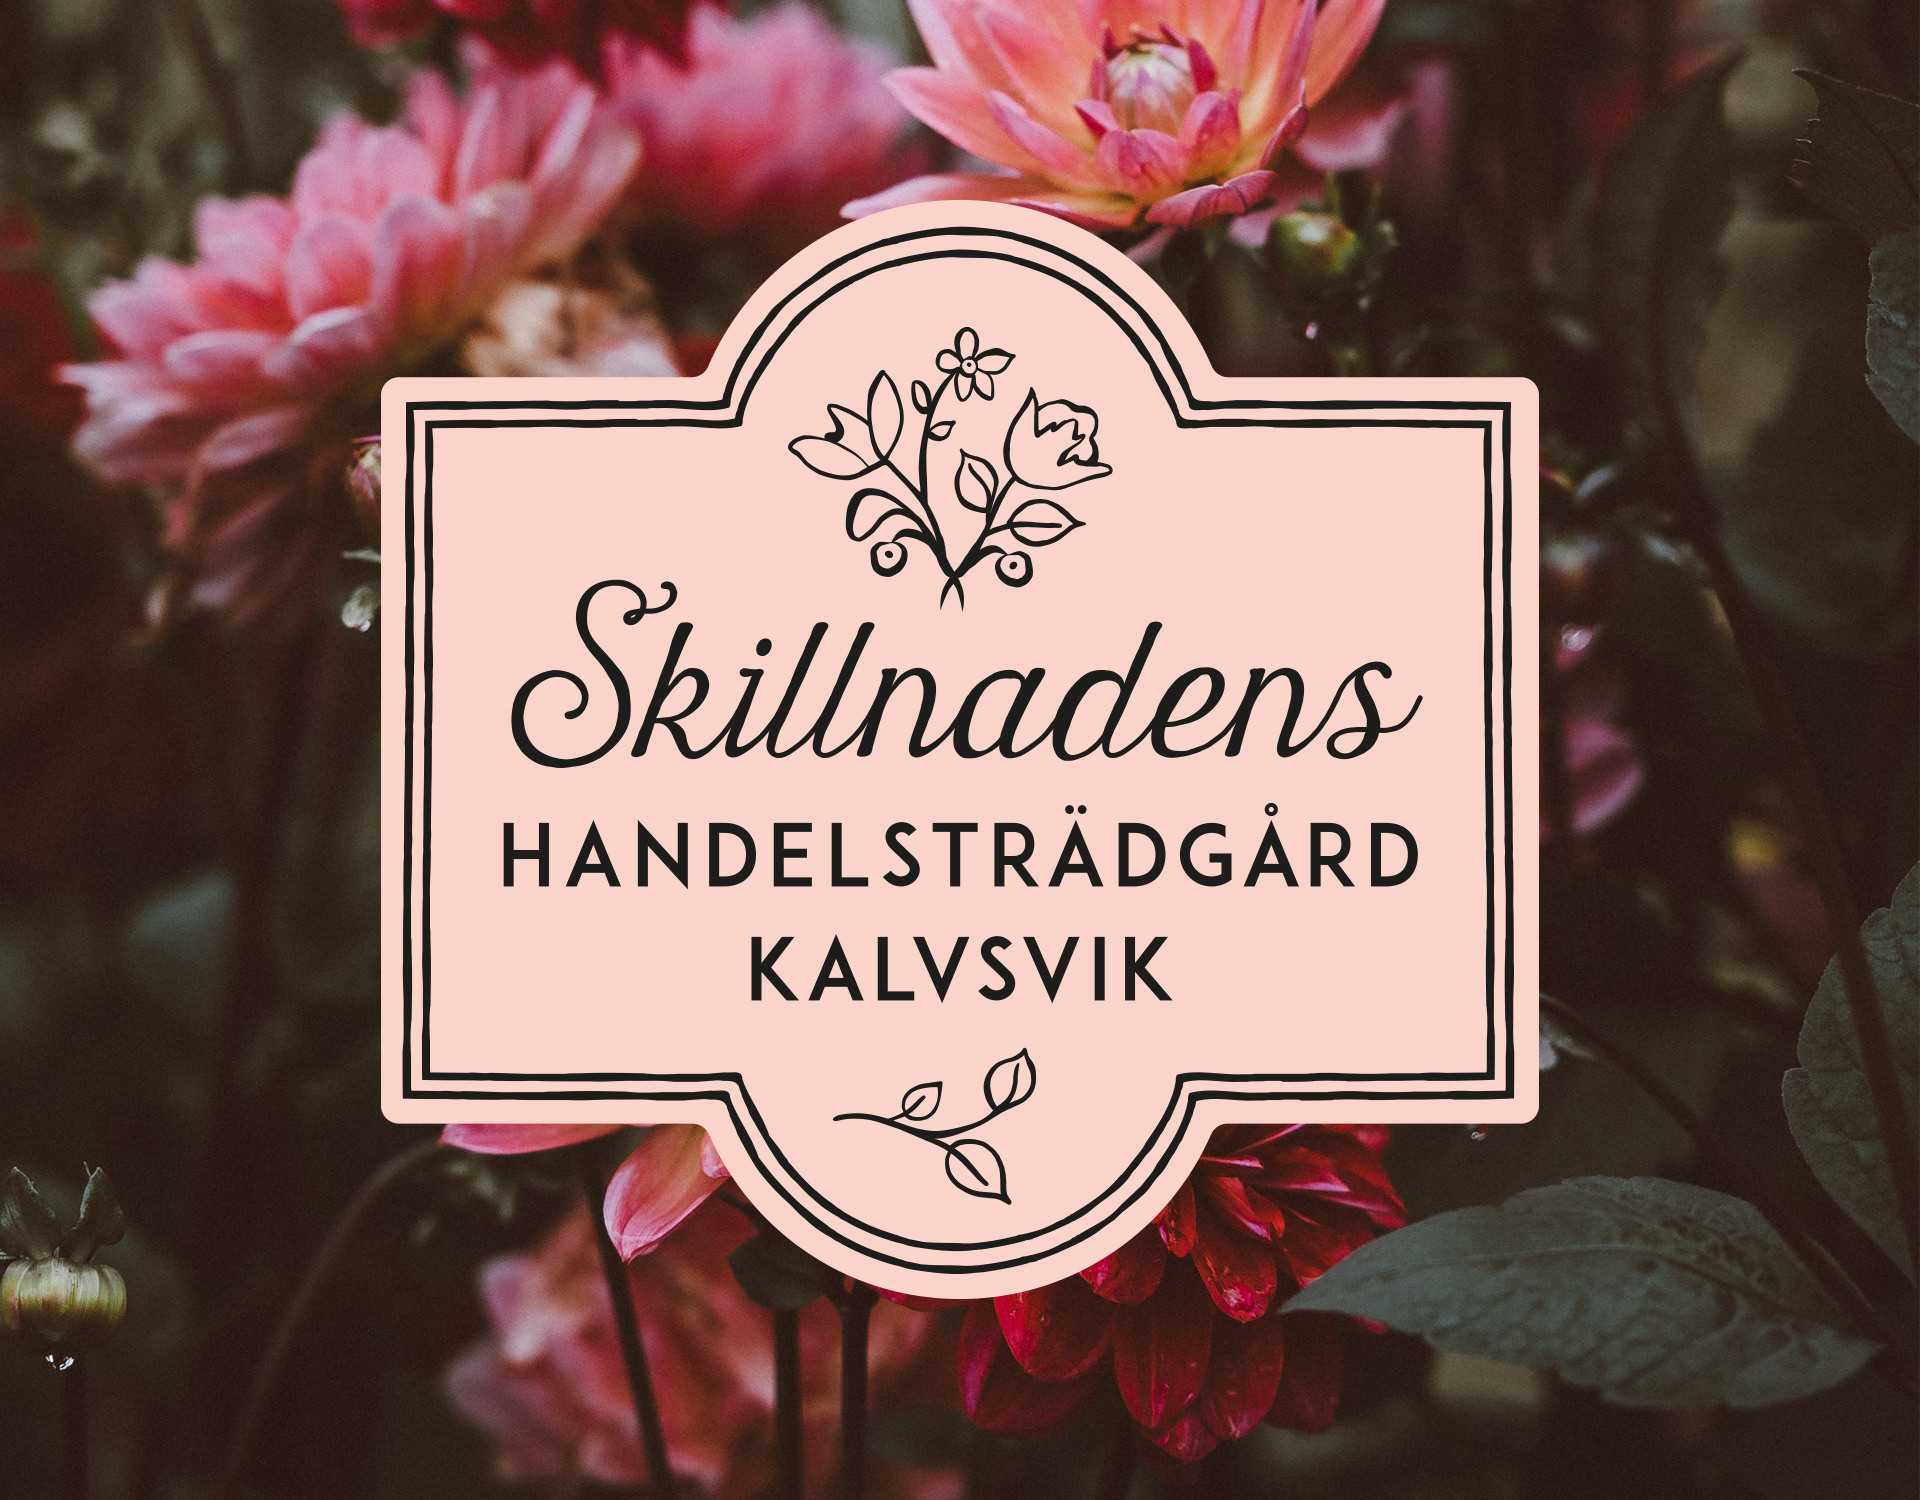 Selected work for Skillandens Handelsträdgård designed by Studio Poi